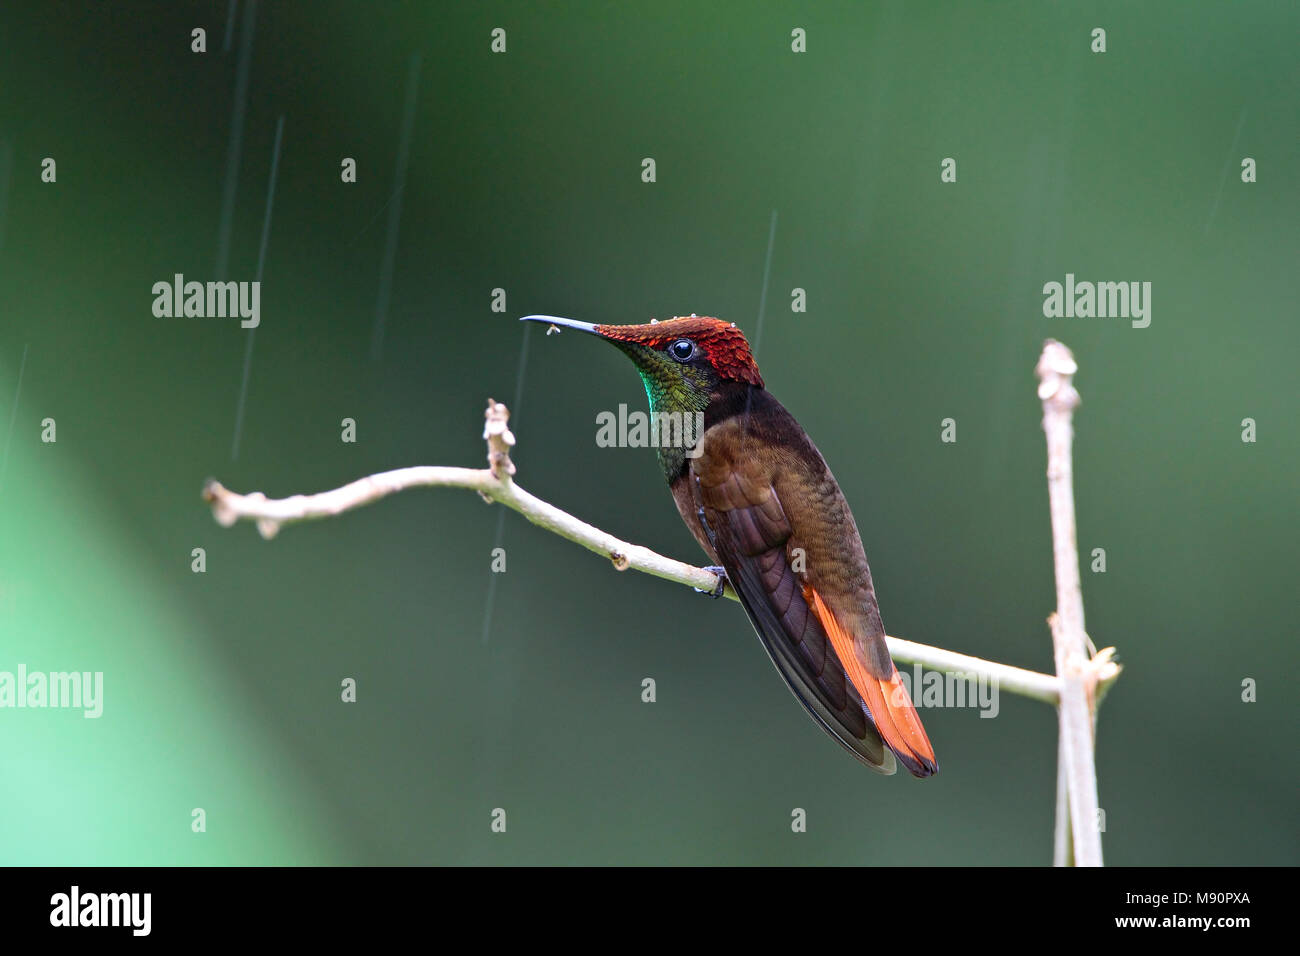 Rode Kolibrie zittend op tak tijdens regenbui Tobago, Ruby topaz Hummingbird perched on branch during rainshower Tobago Stock Photo